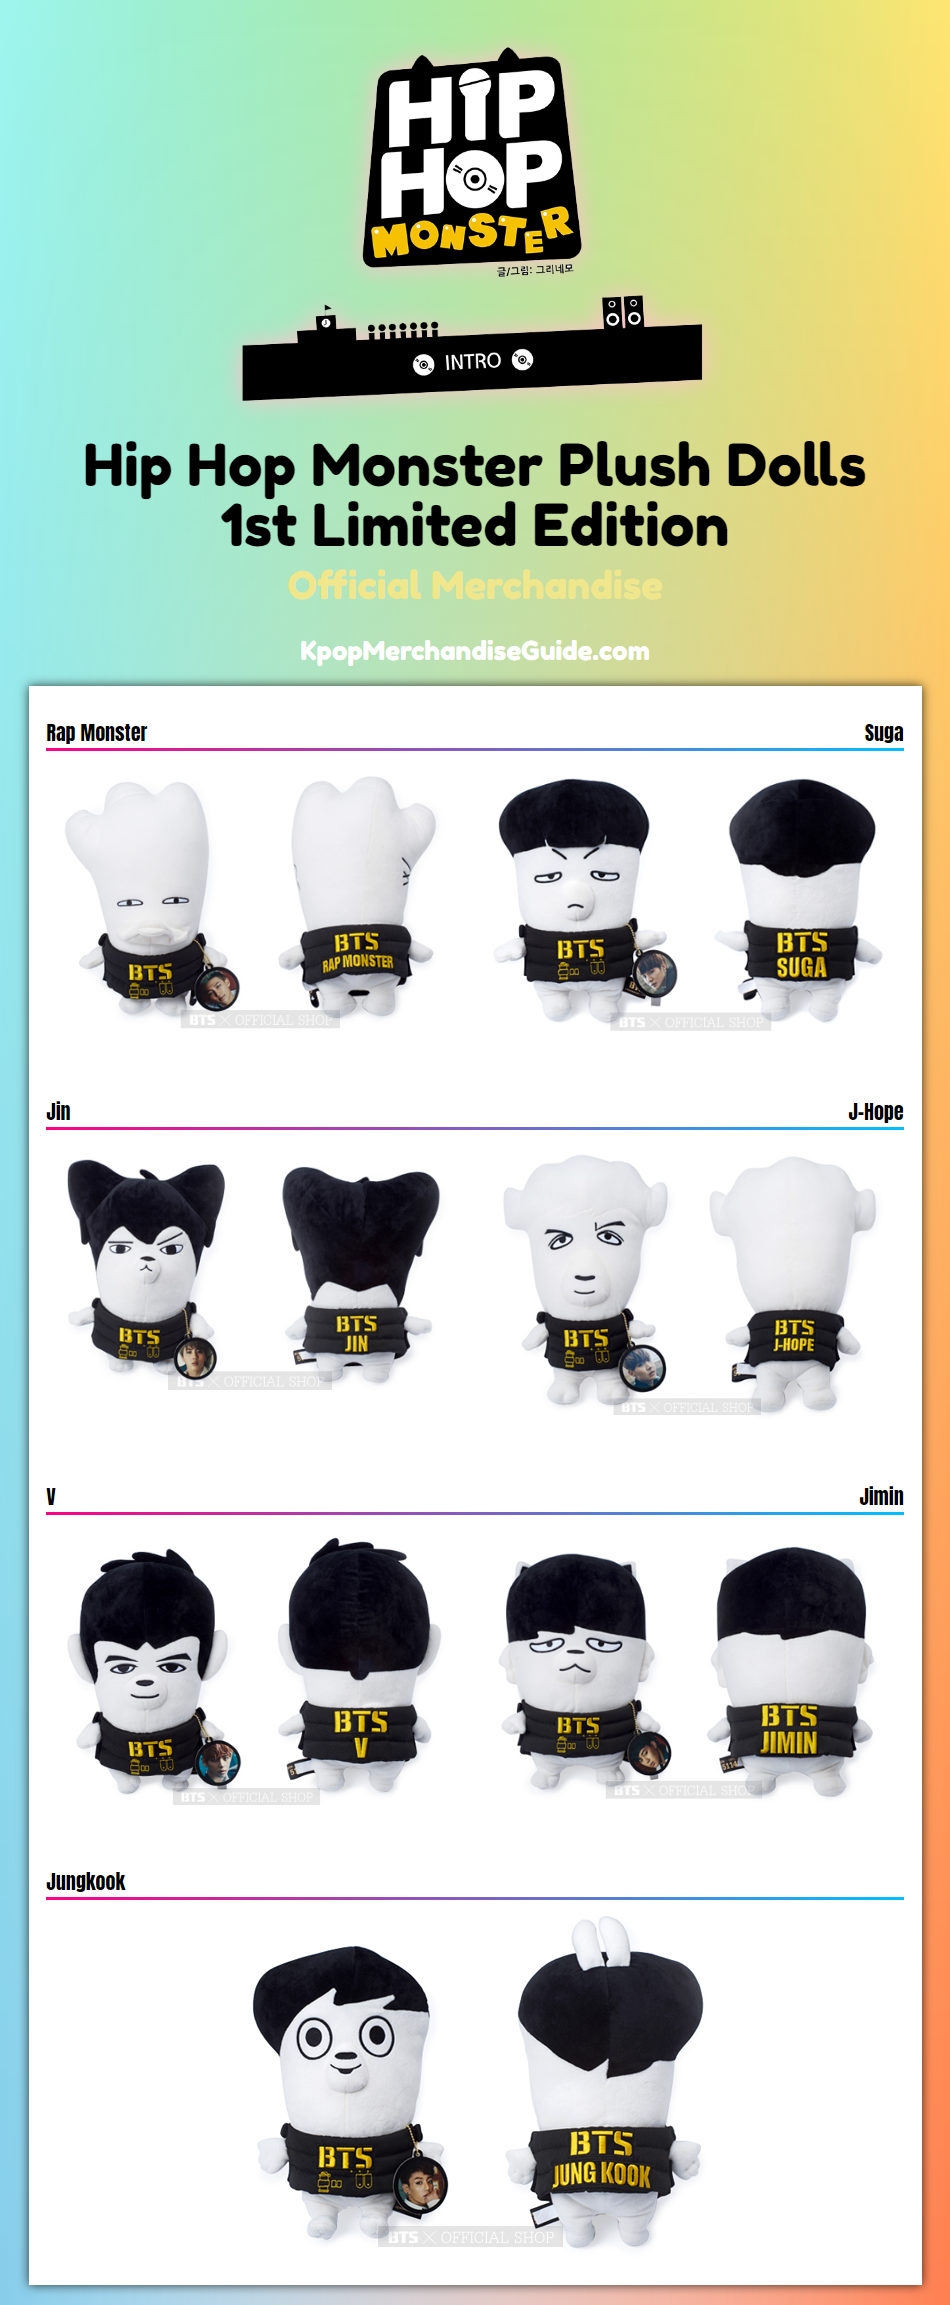 BTS Hip Hop Monster Plush Dolls: 1st Limited Edition